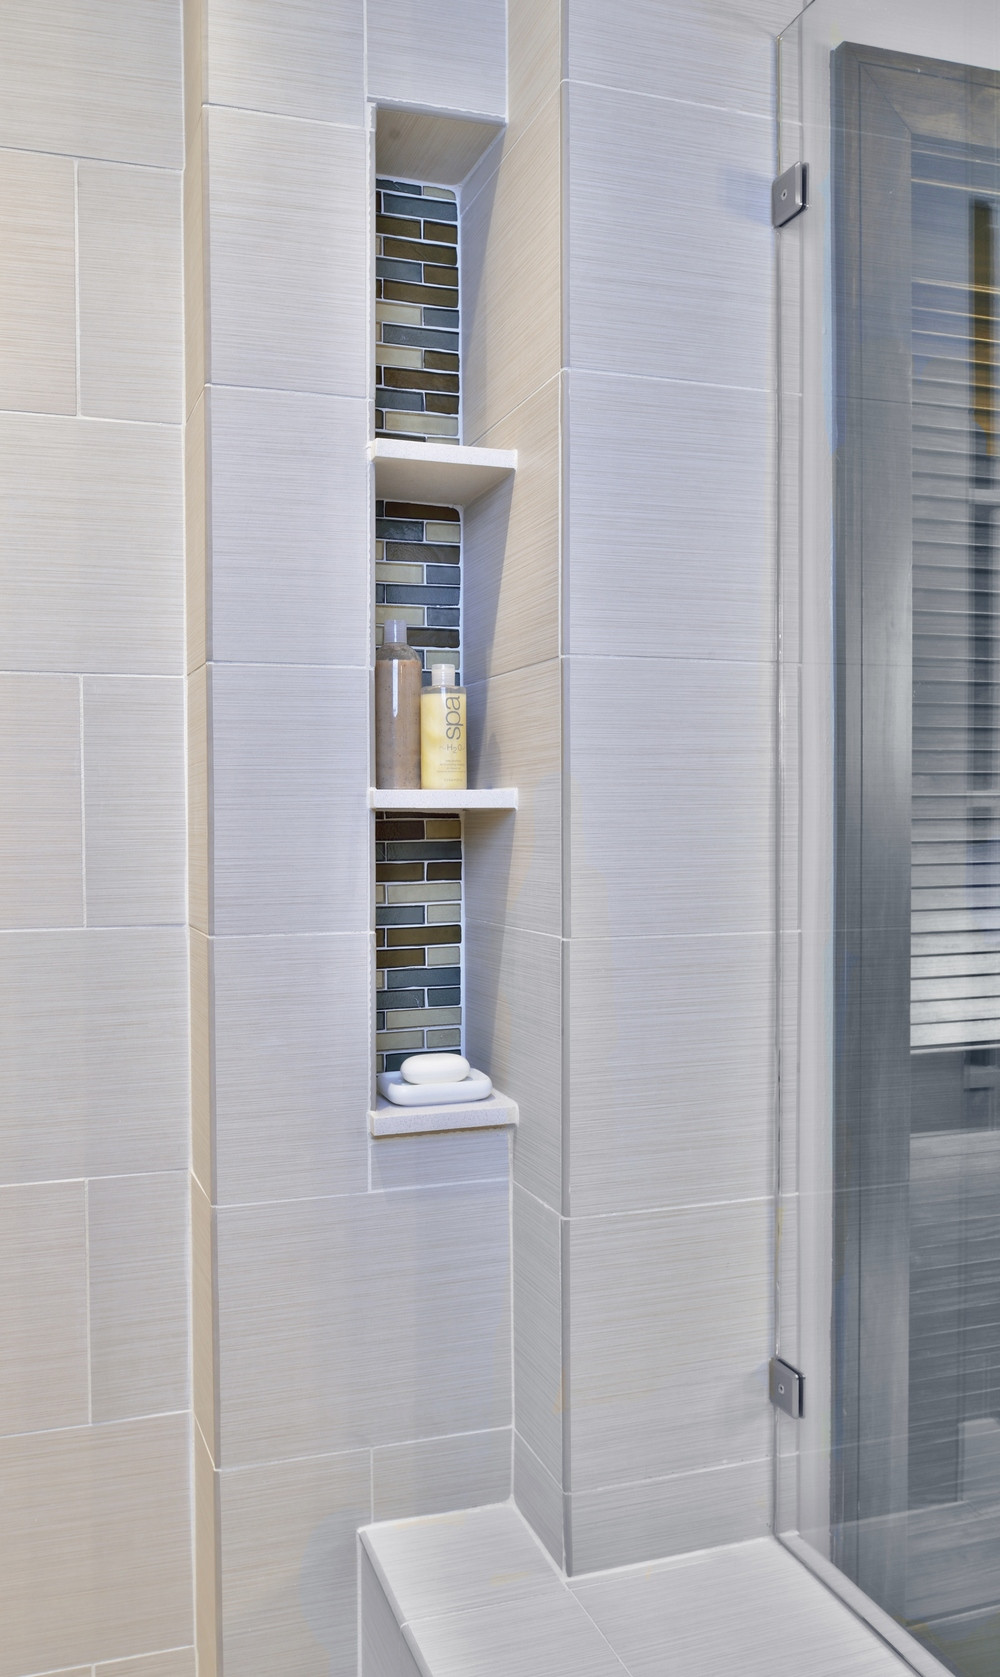 Bathroom Wall Niche
 Top 10 Bathroom Design Trends Guaranteed to Freshen Up